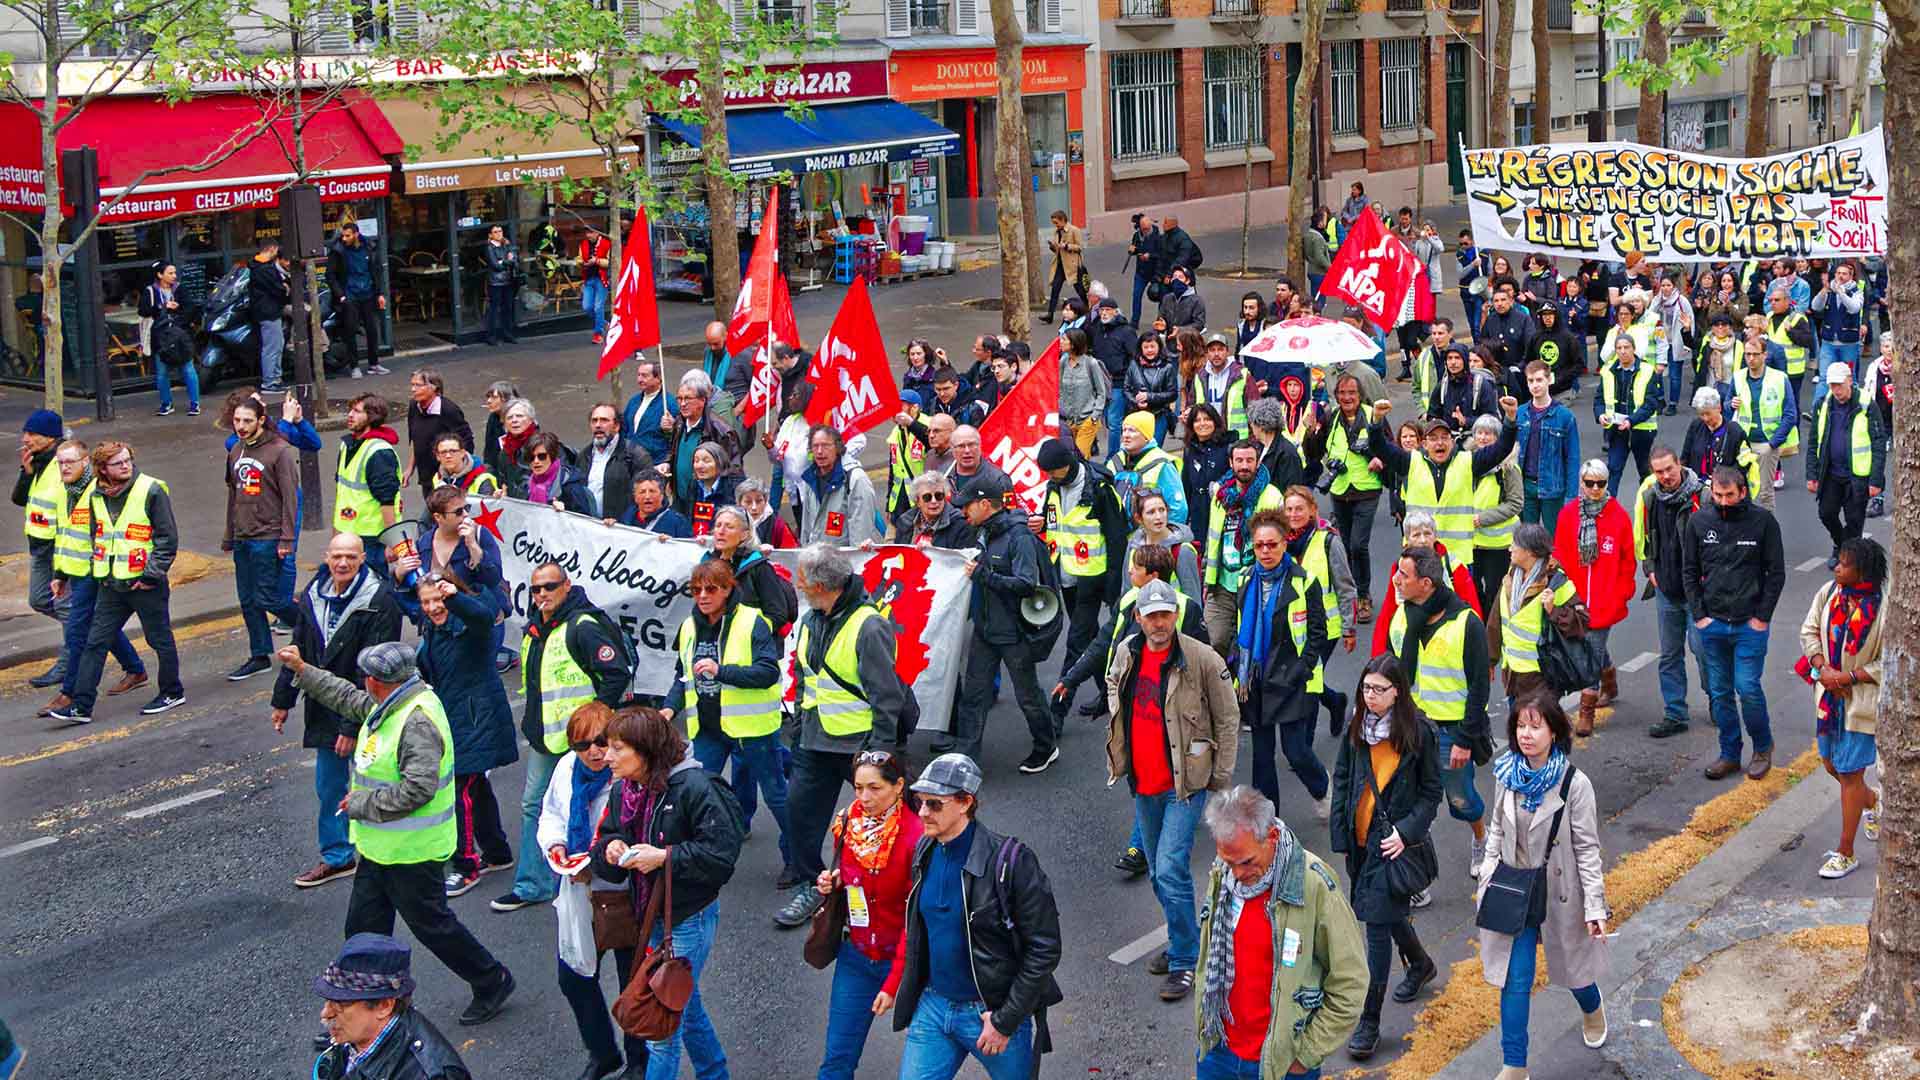 Manifestation des gilets jaunes le 27 Avril 2019, Des Banderoles revendicatives 